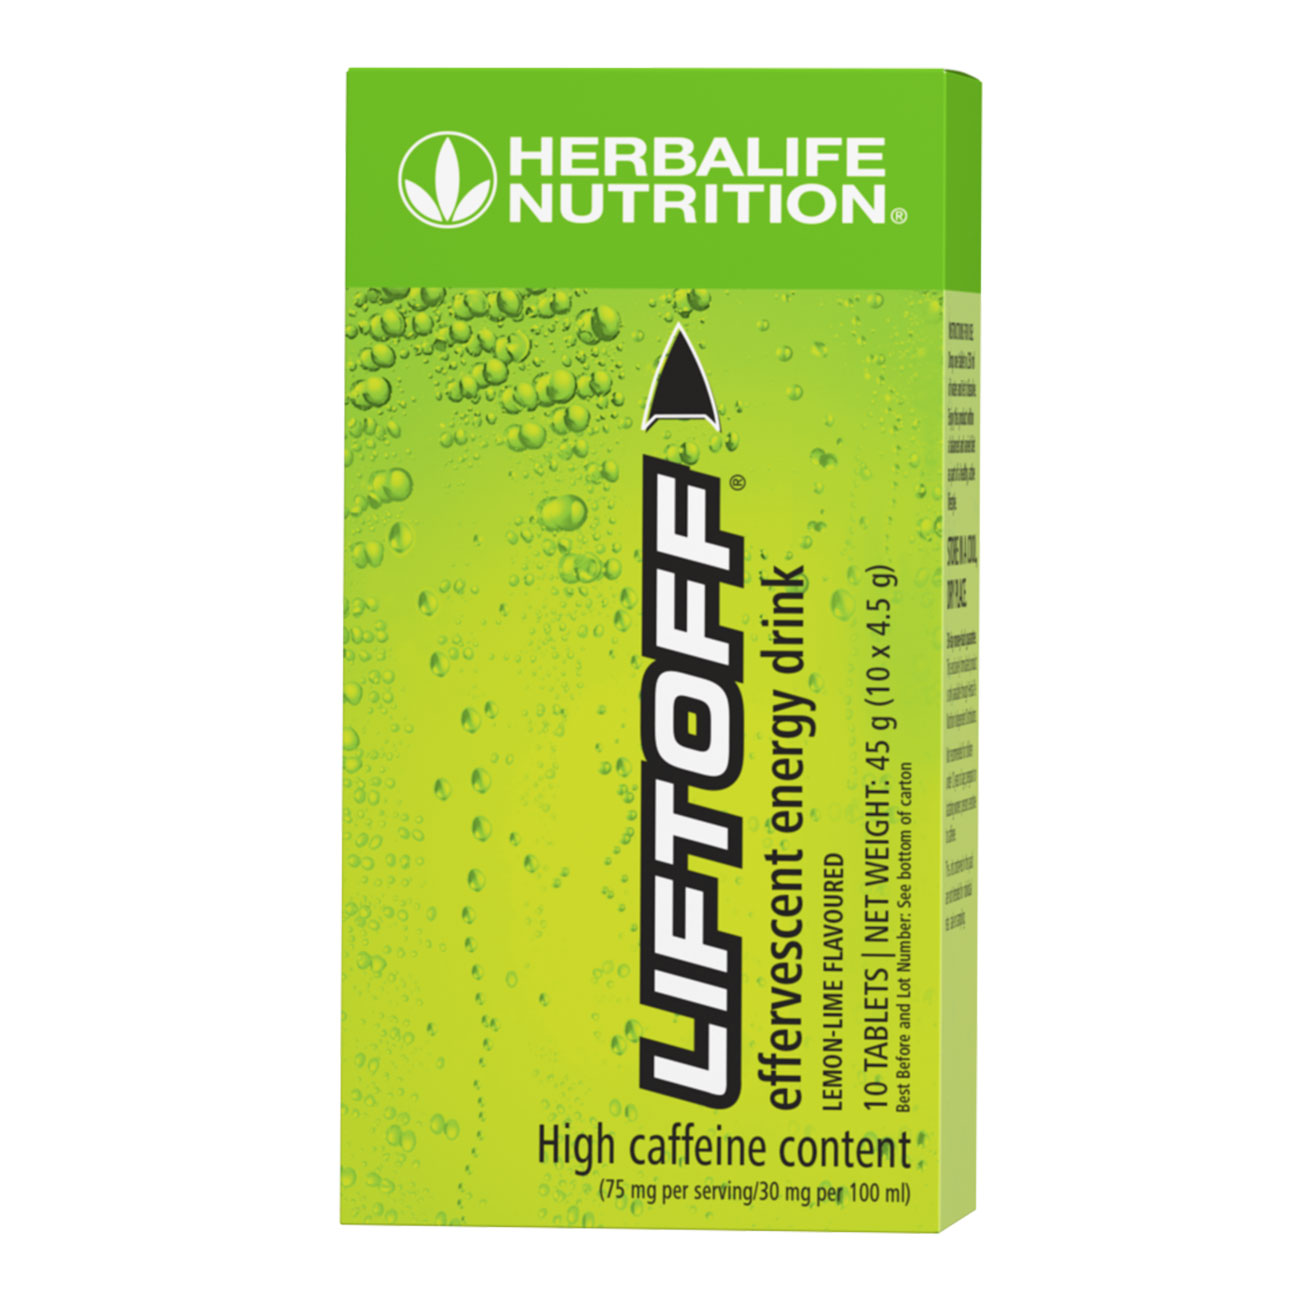 Lift Off® Energy Drink Lemon-Lime product shot.